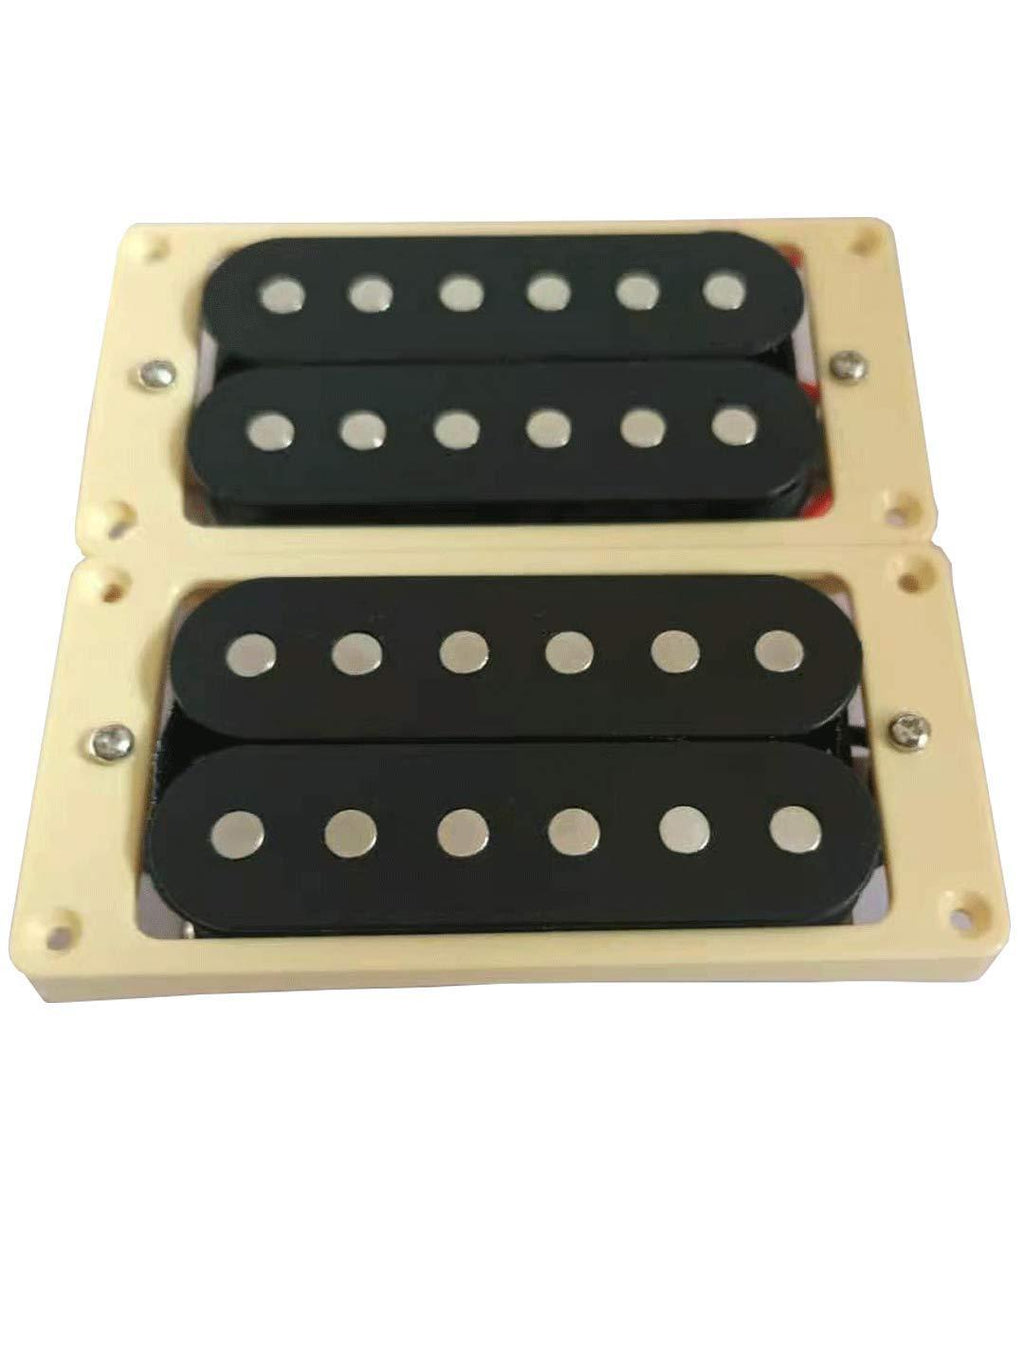 Electric Guitar Humbucker Pickups Double Coil Guitar Bridge Pickup & Neck Pickups Set - Black 2101-SYQ-LPB